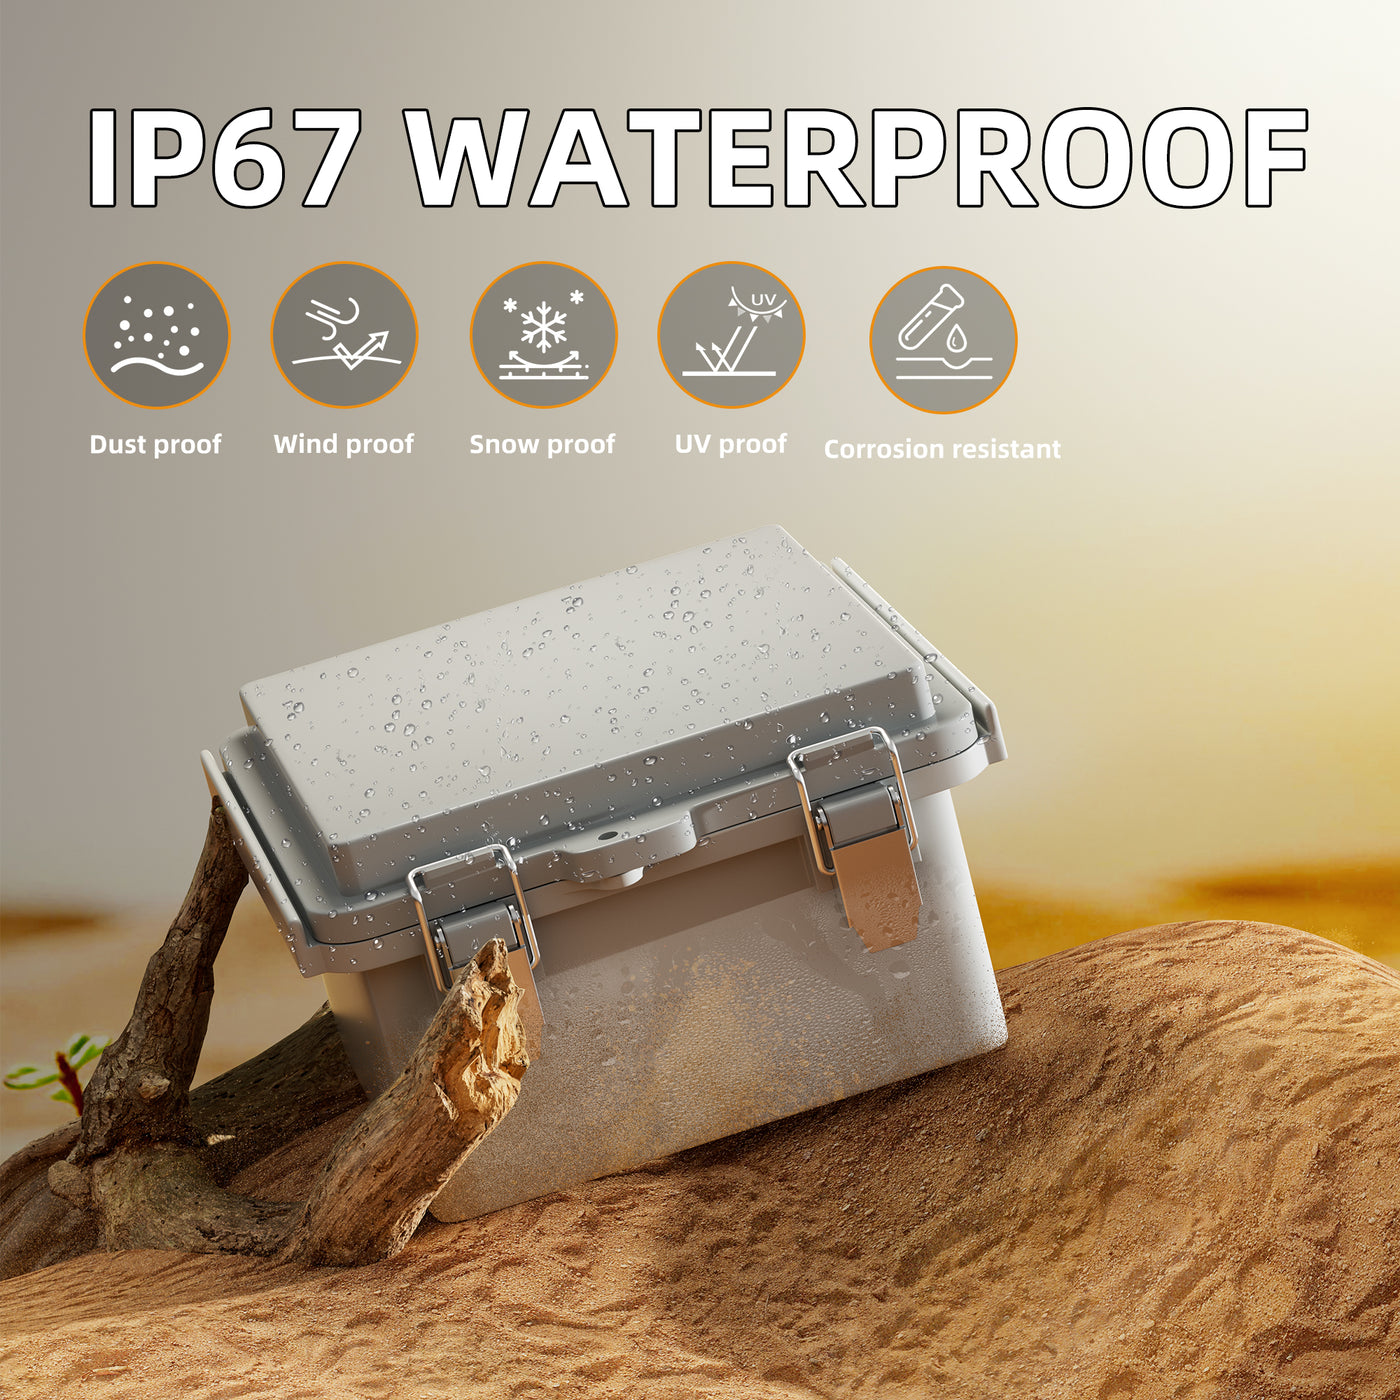 IP67 Waterproof Plastic Outdoor Electrical Junction Box - 5.1"x5.1"x3.3" - DAIER